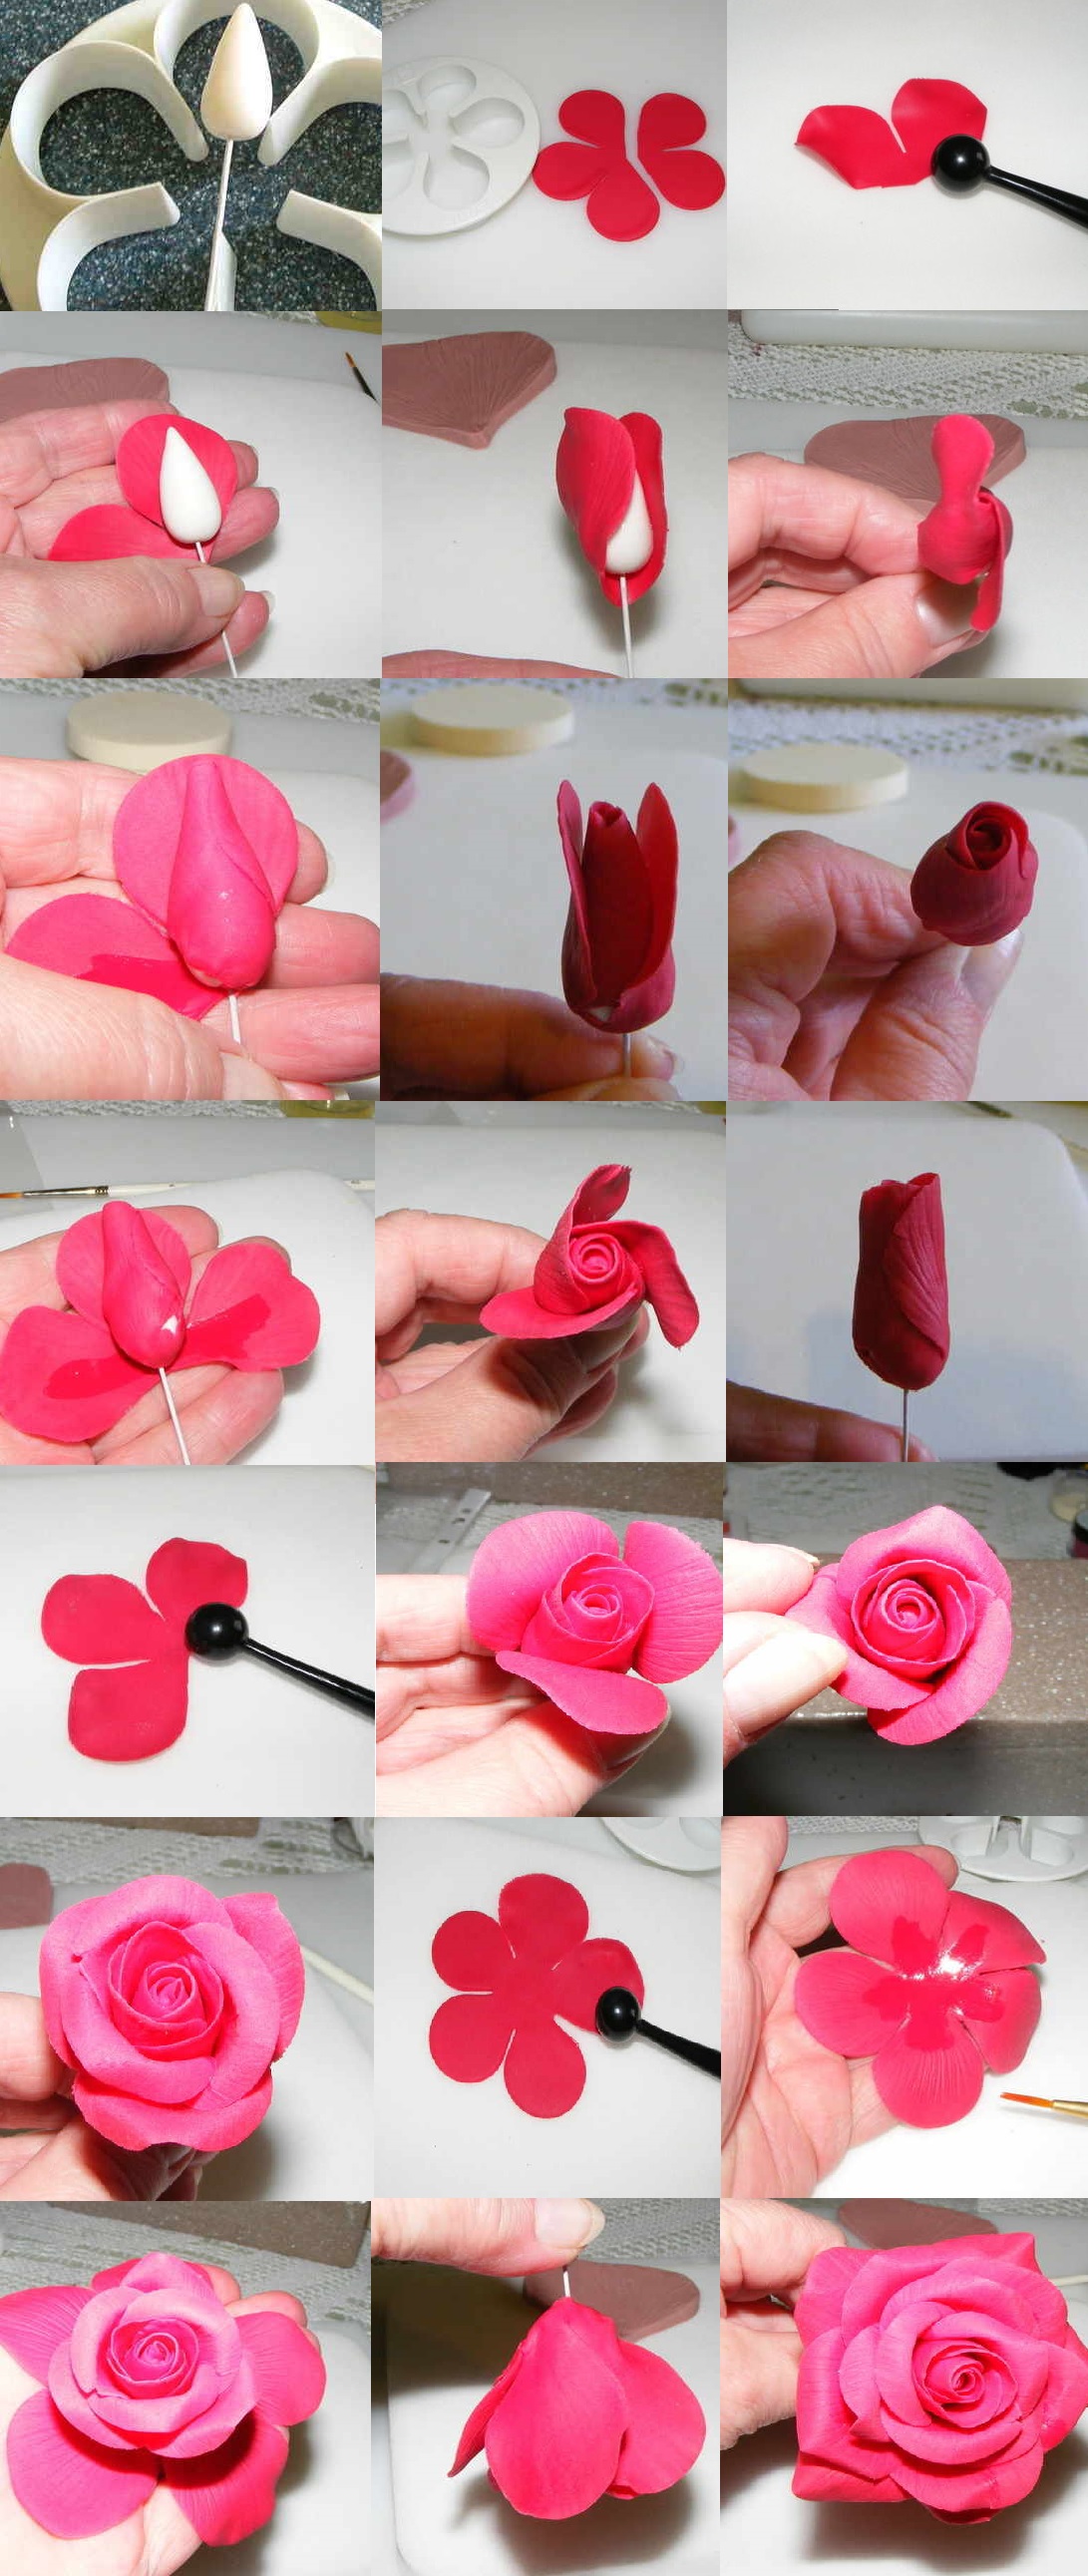 Polymer clay rose tutorial